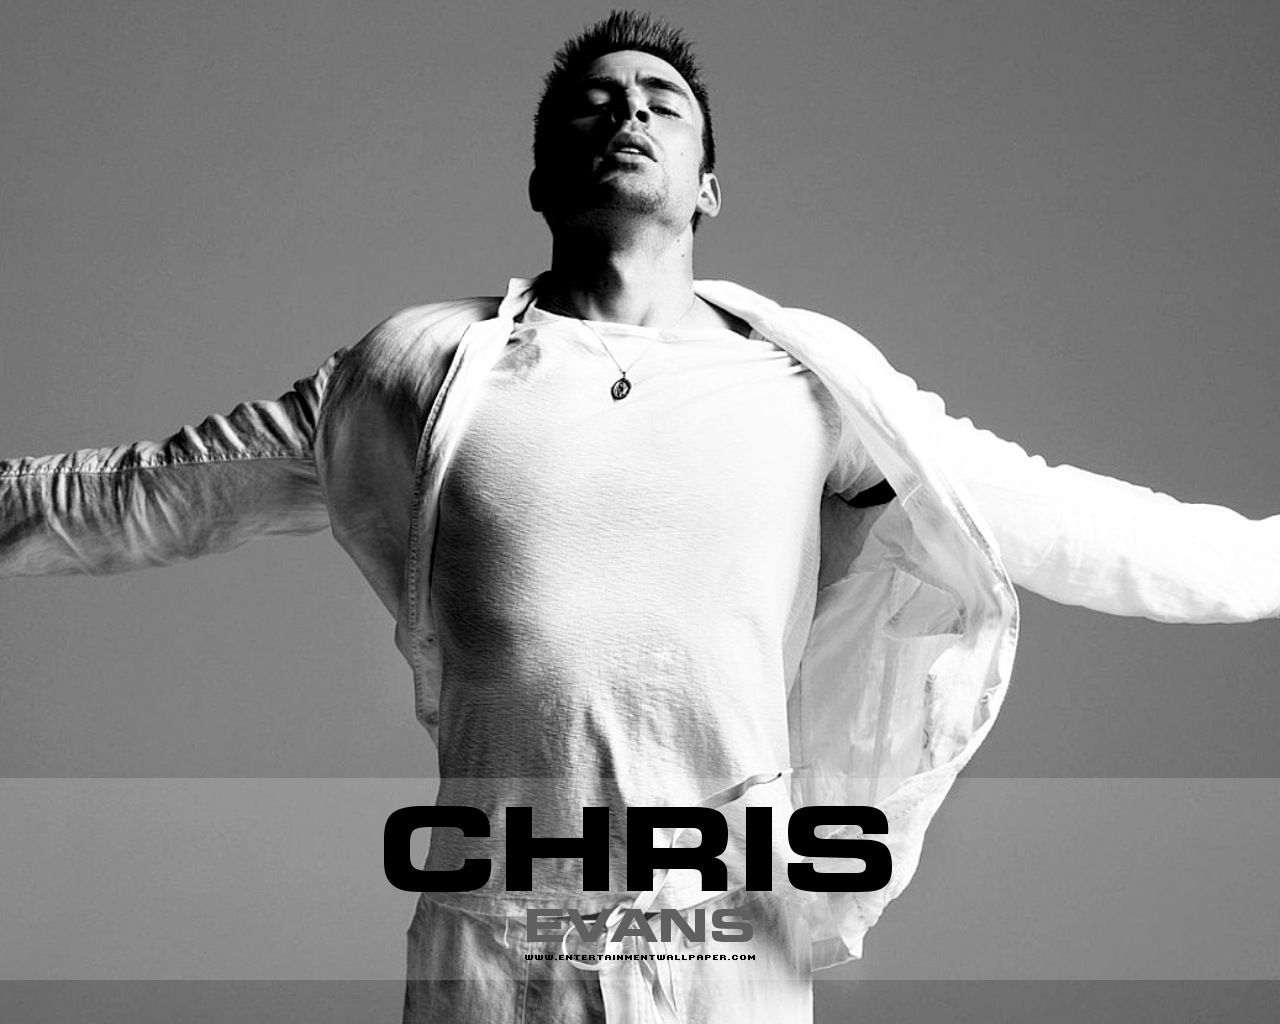 Chris - Chris Evans Wallpaper (3325060) - Fanpop